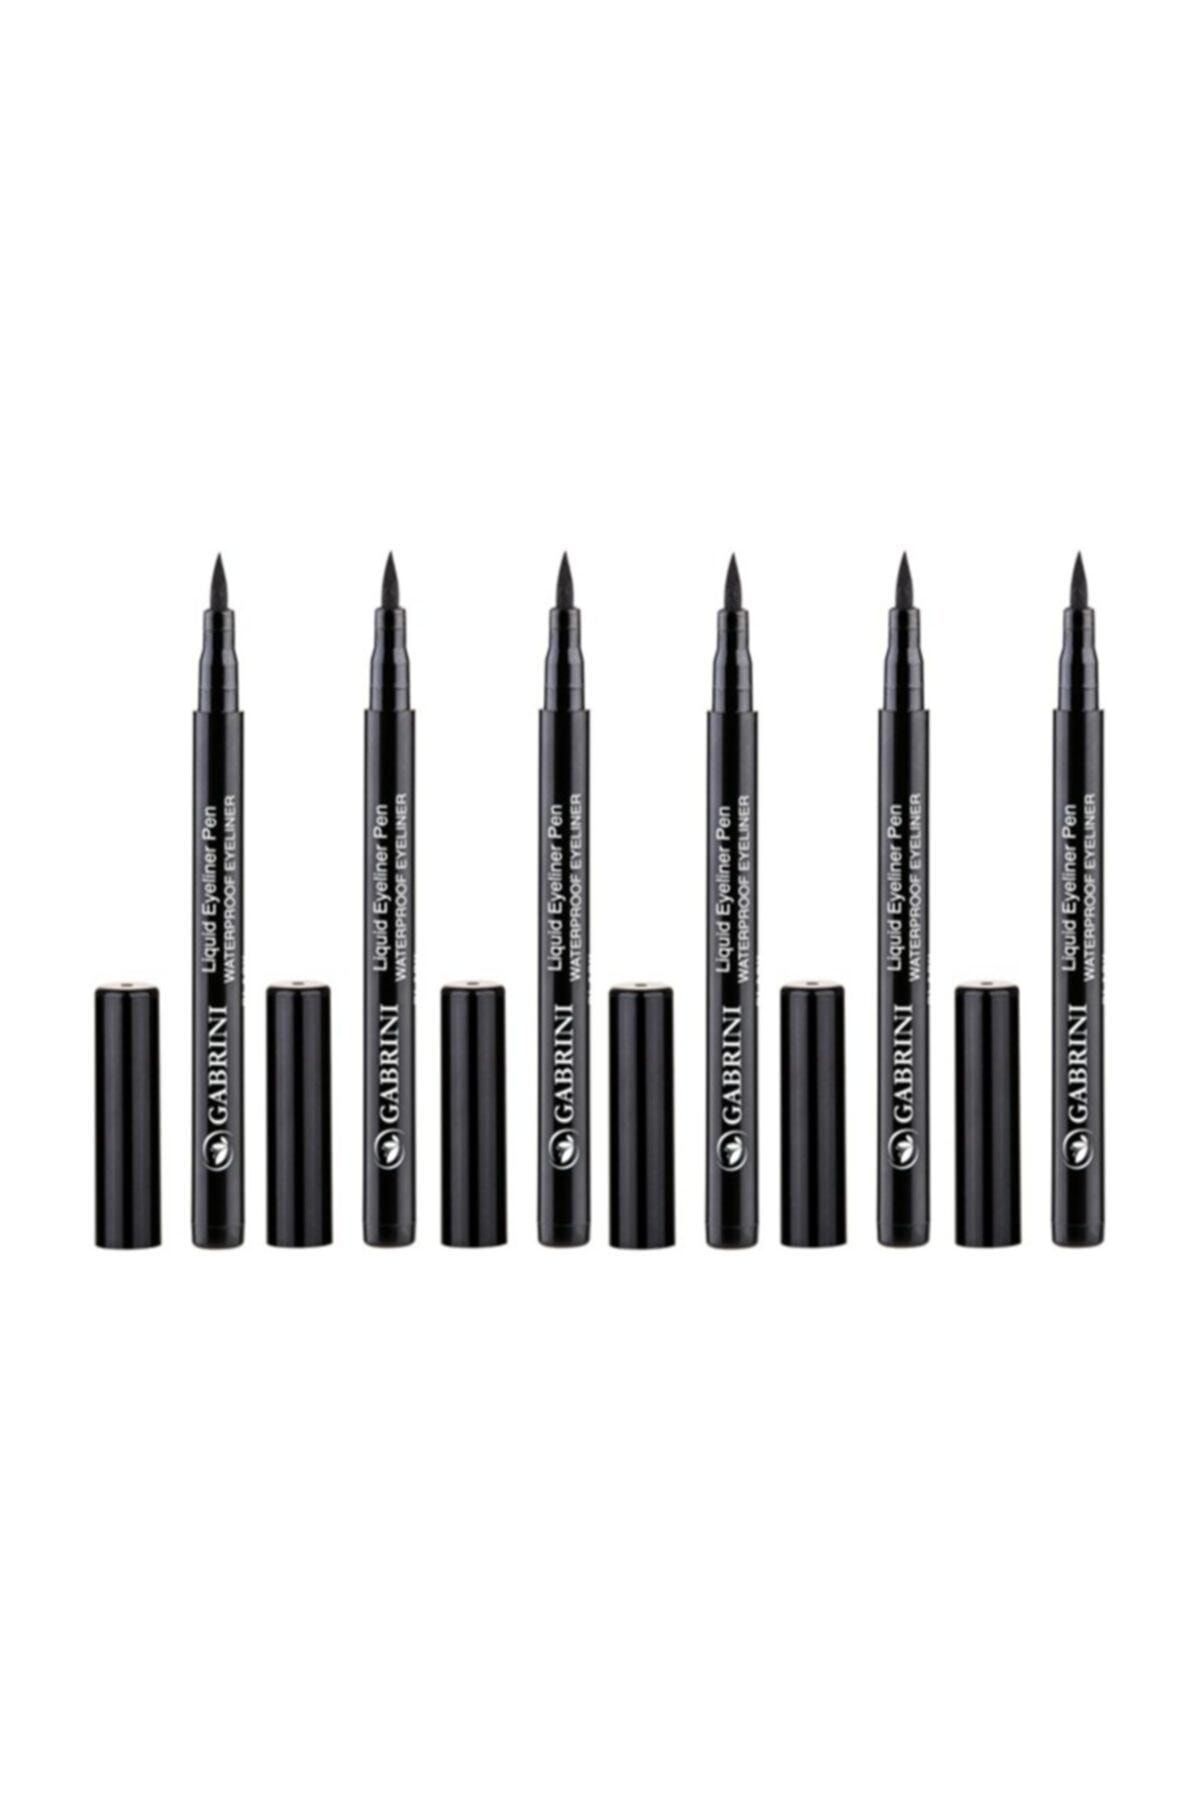 Gabrini Kalem Dipliner Black Waterproof Liquid Eyeliner Pen X 6 Adet